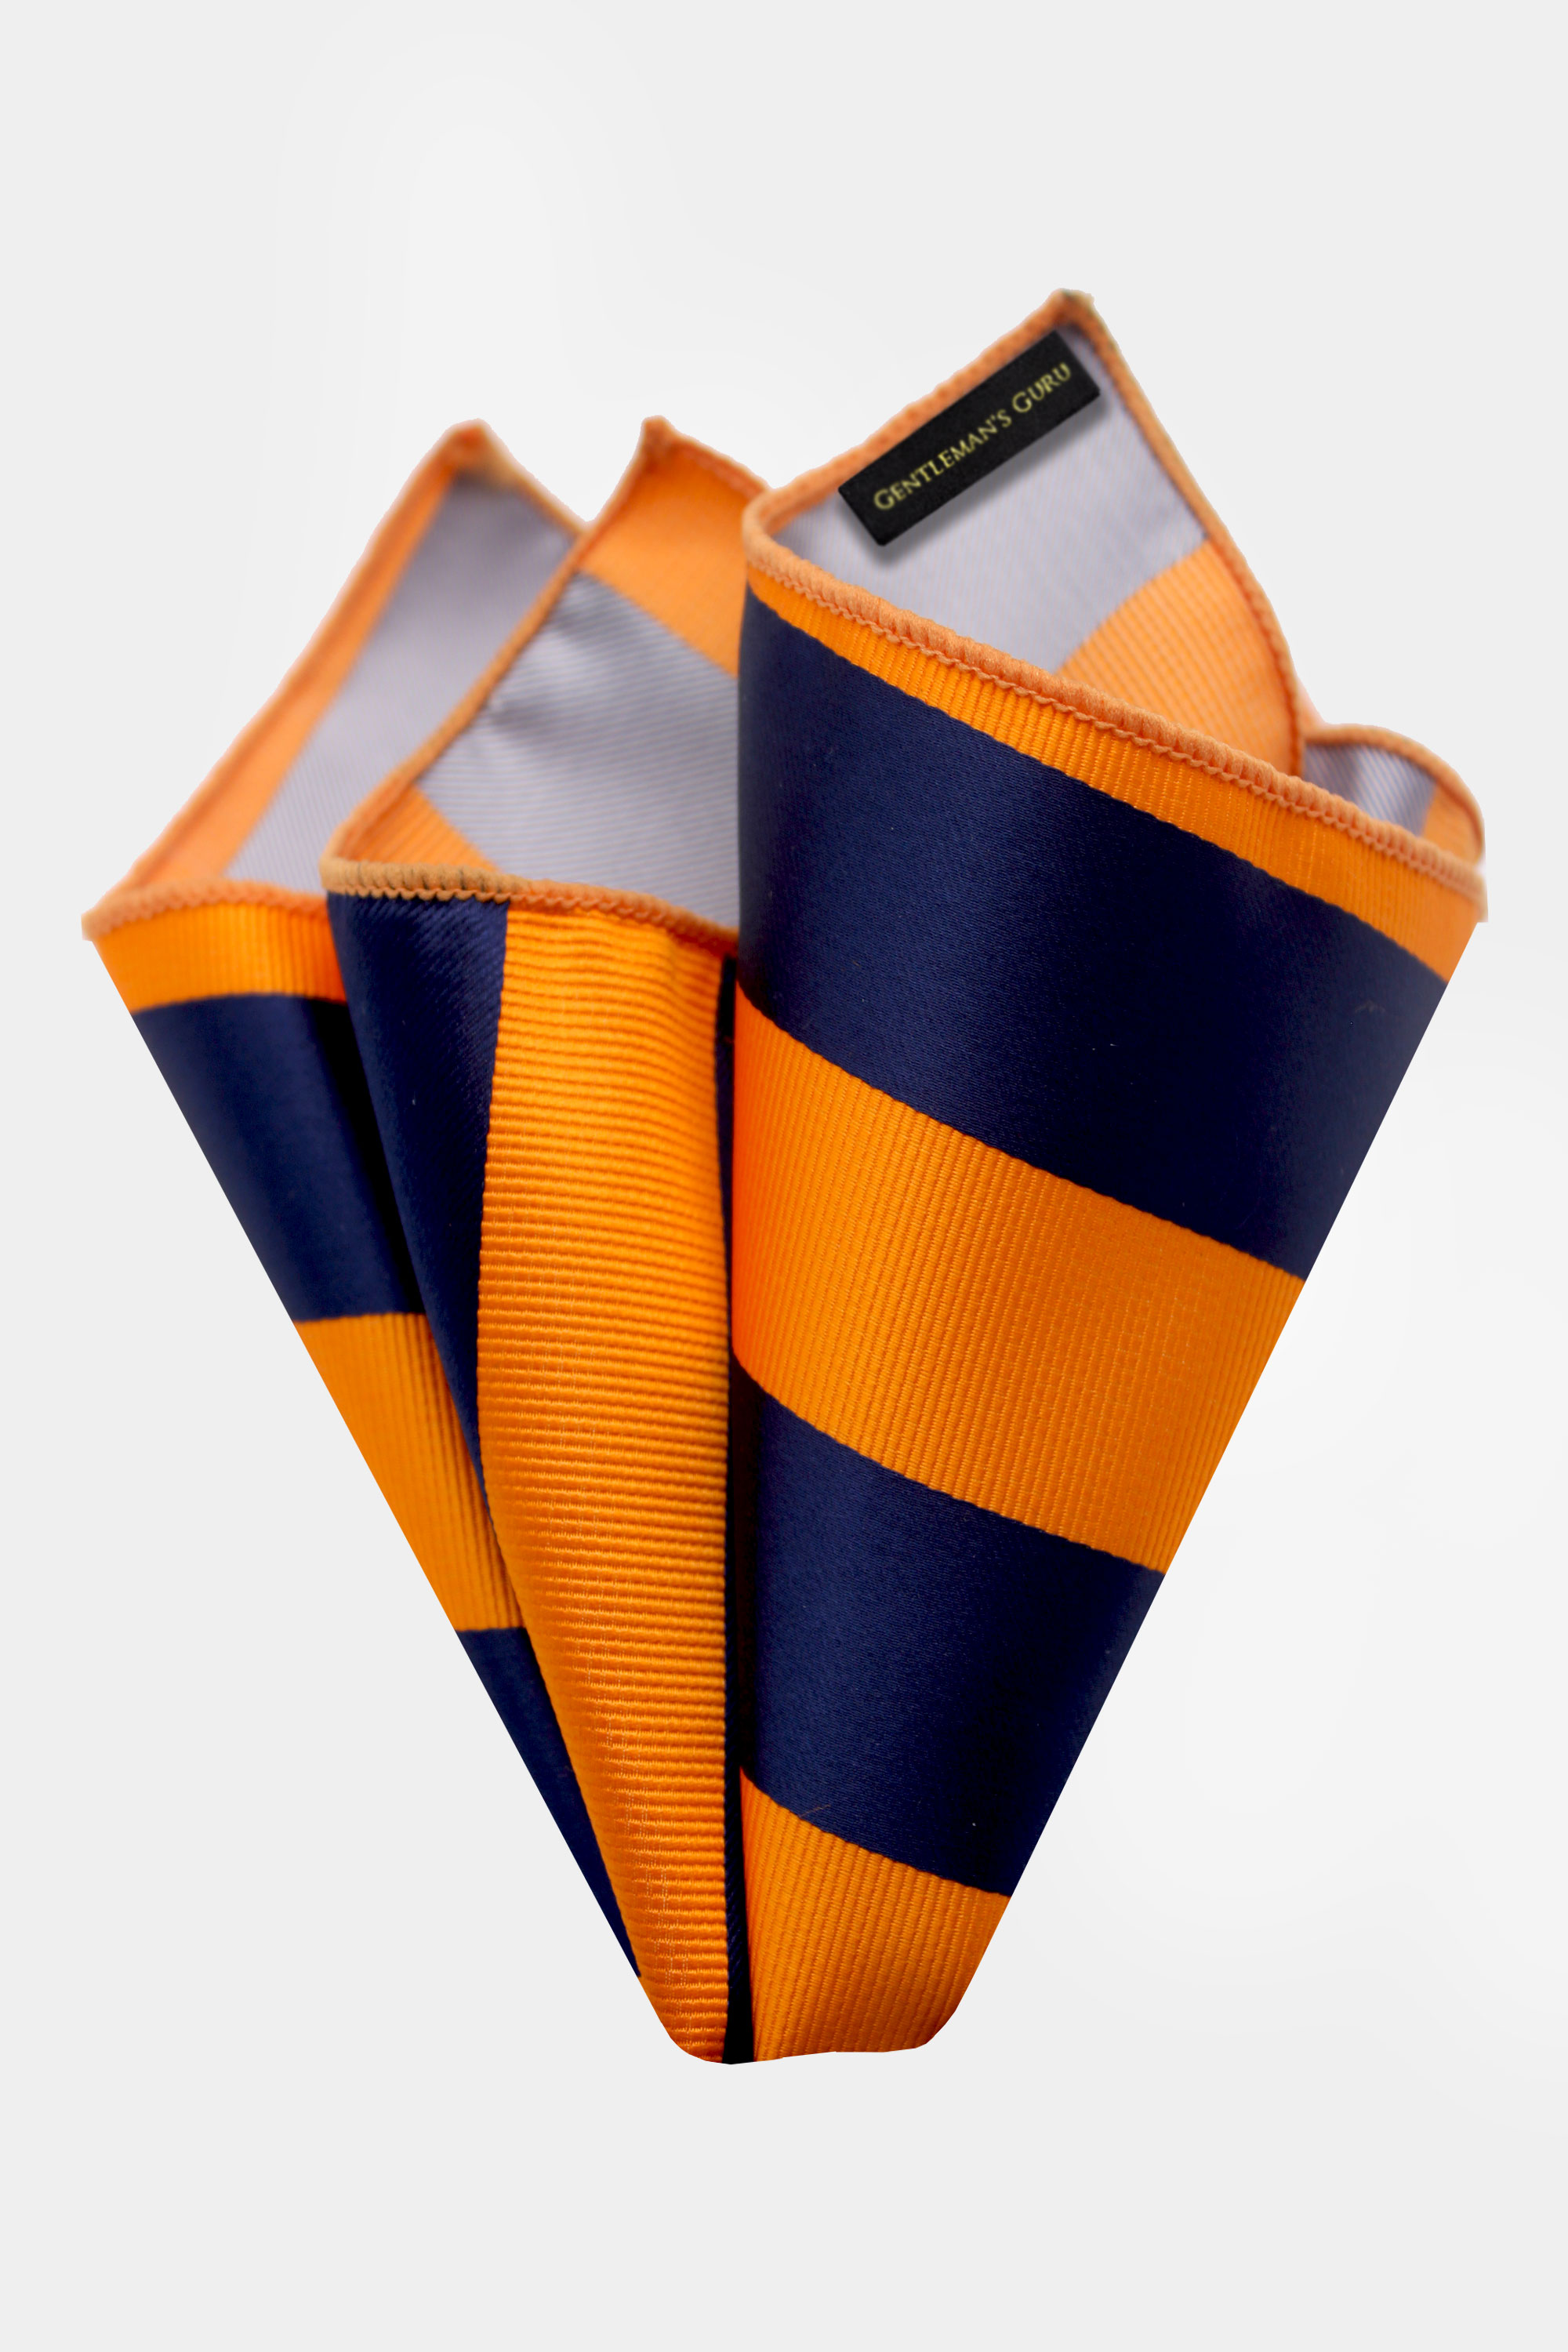 Navy-Blue-and-Orange-Striped-Pocket-Square-Handkerchief-from-Gentlemansguru.com